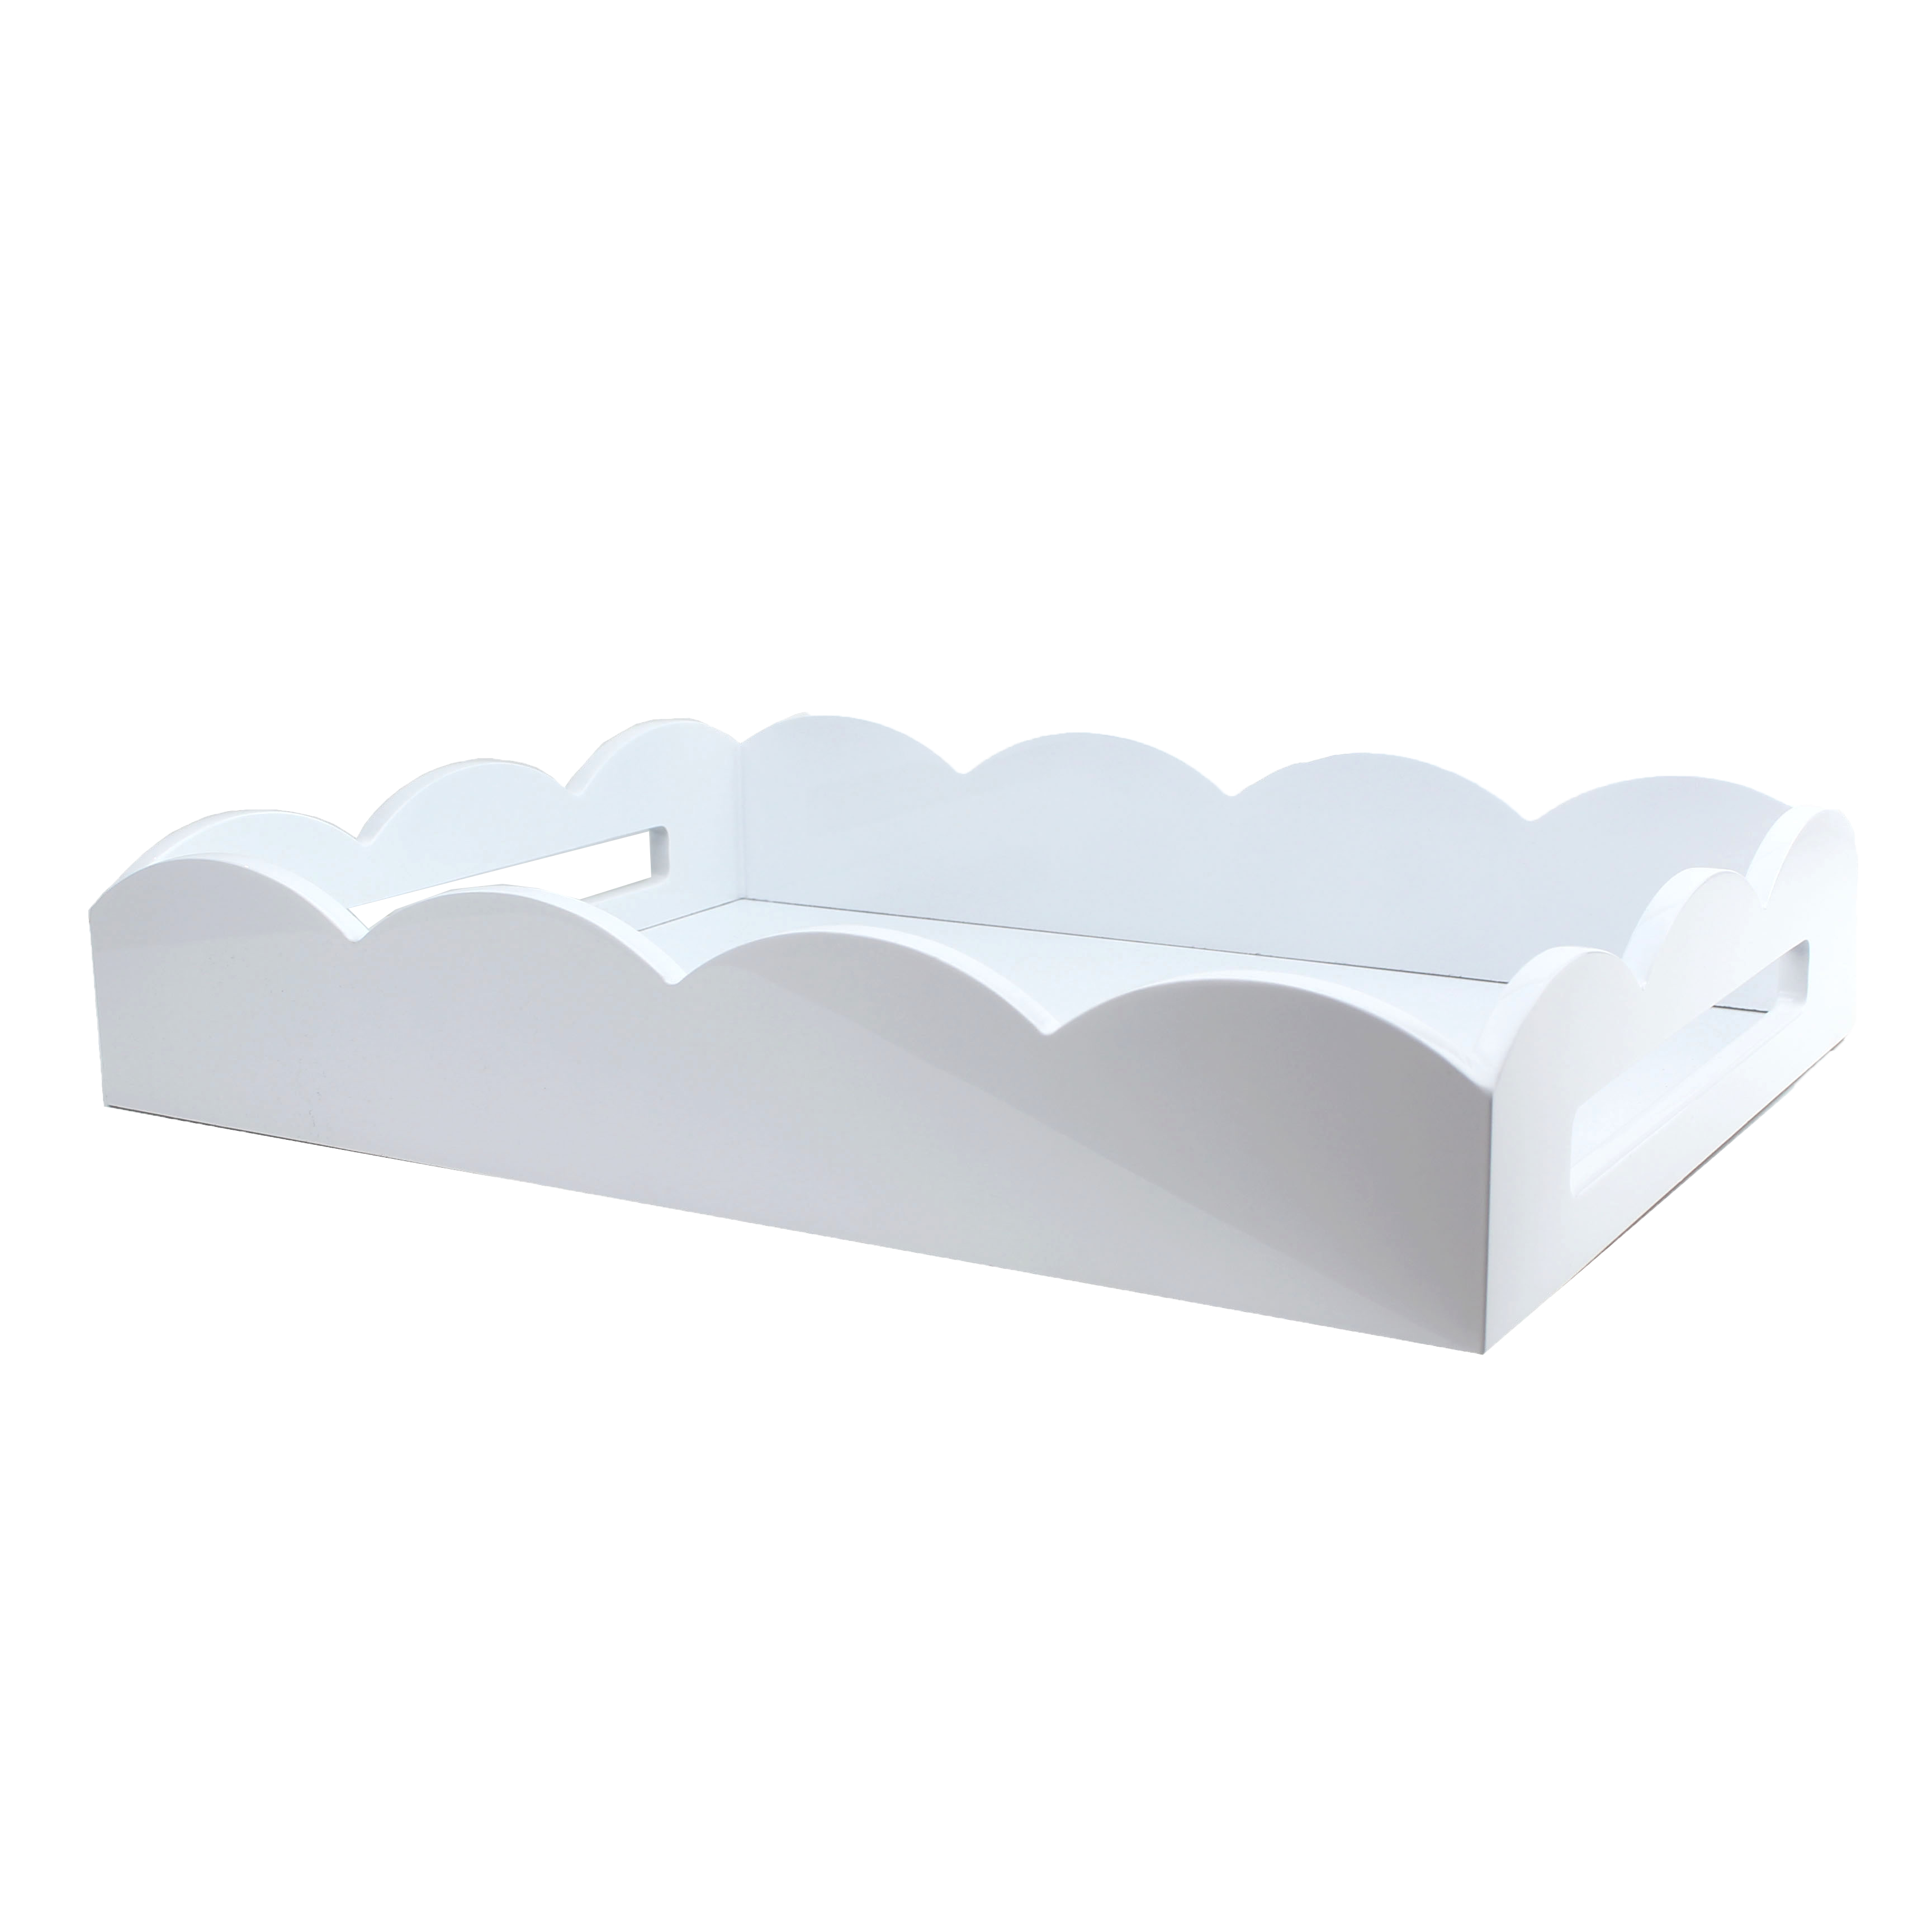 Scalloped tray | medium white | Osski